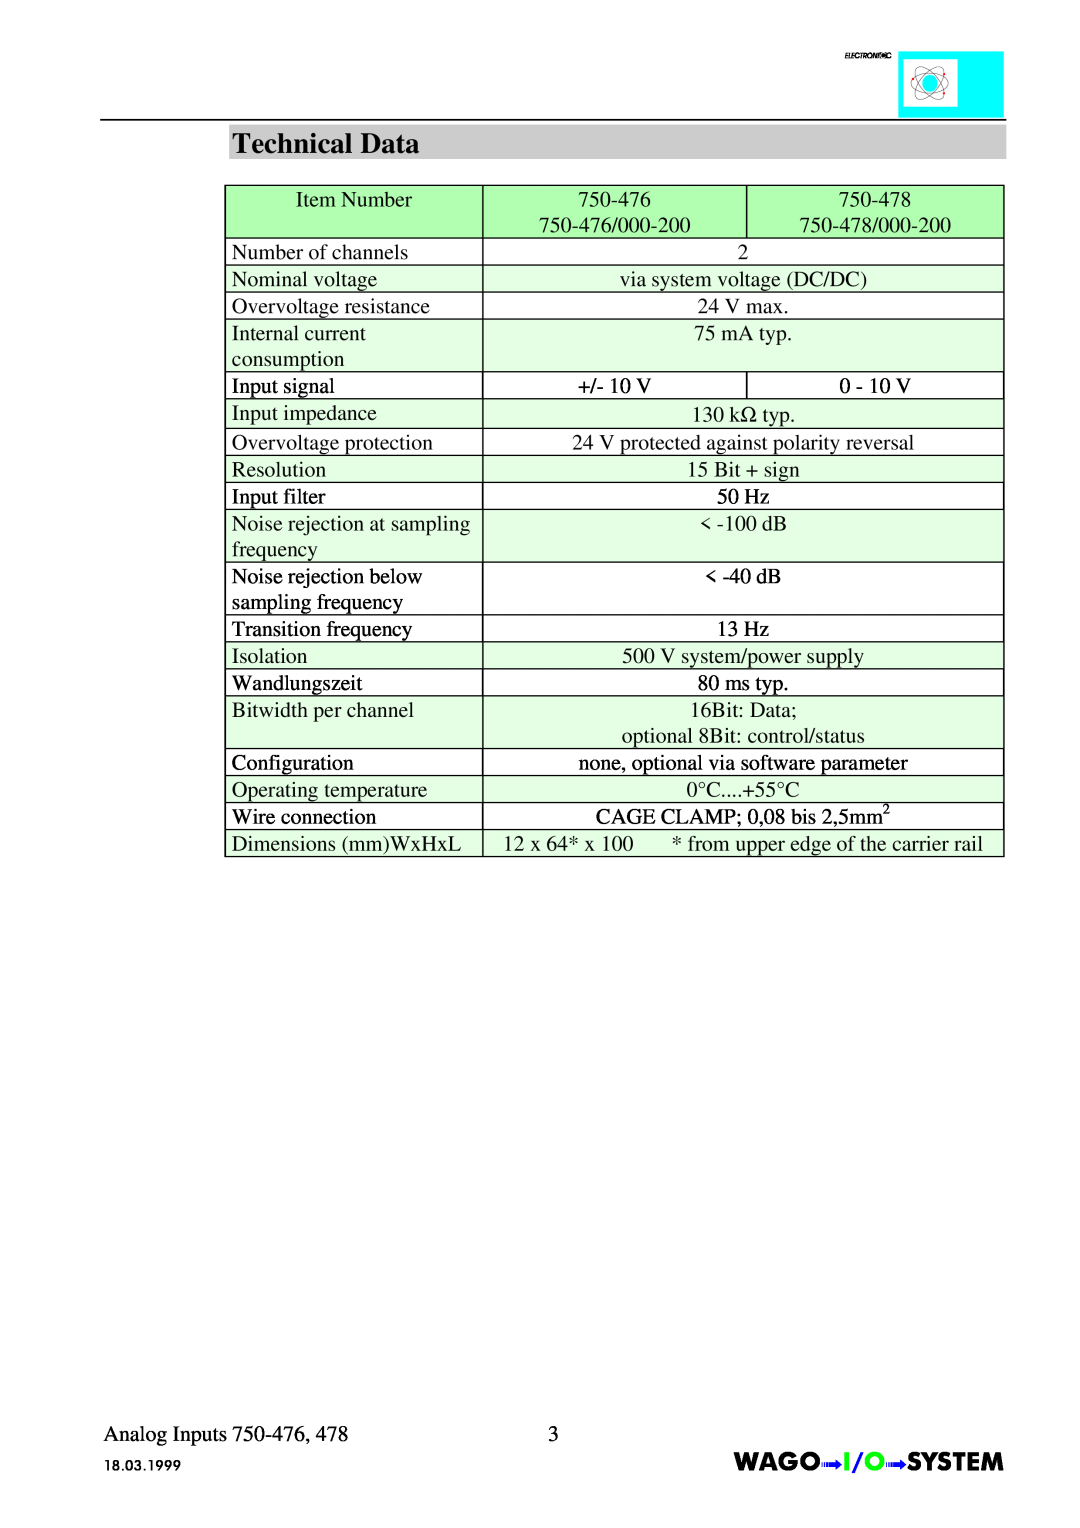 Quatech INTERBUS S manual Technical Data, $*2 , 2 2, 100 dB, 40 dB, 0C....+55C 